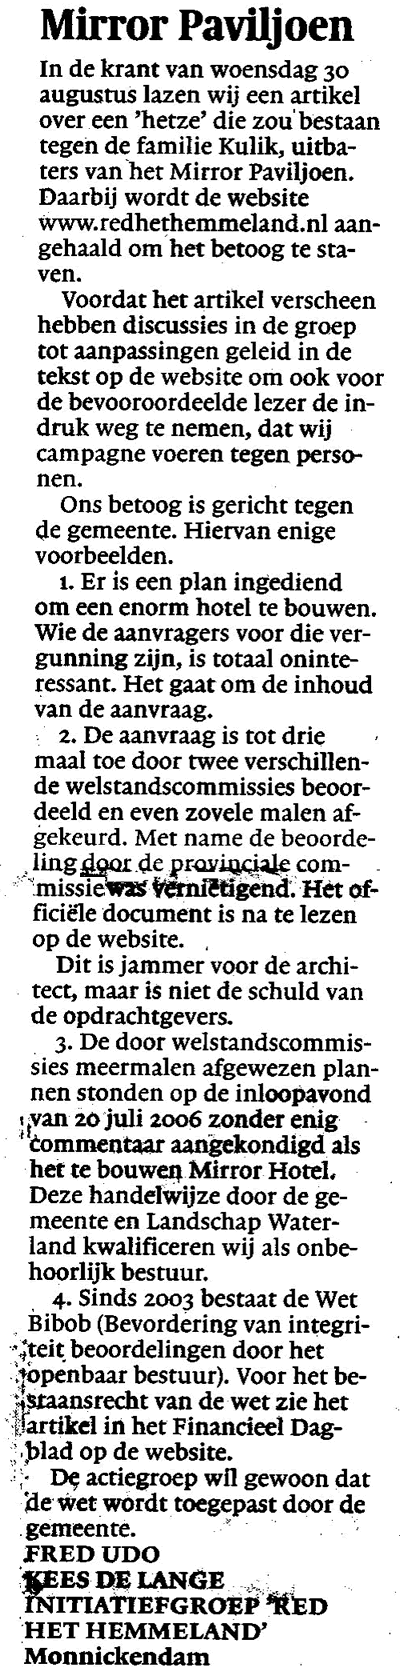 commentaar in Noord-Hollands Dagblad 2 sep 2006